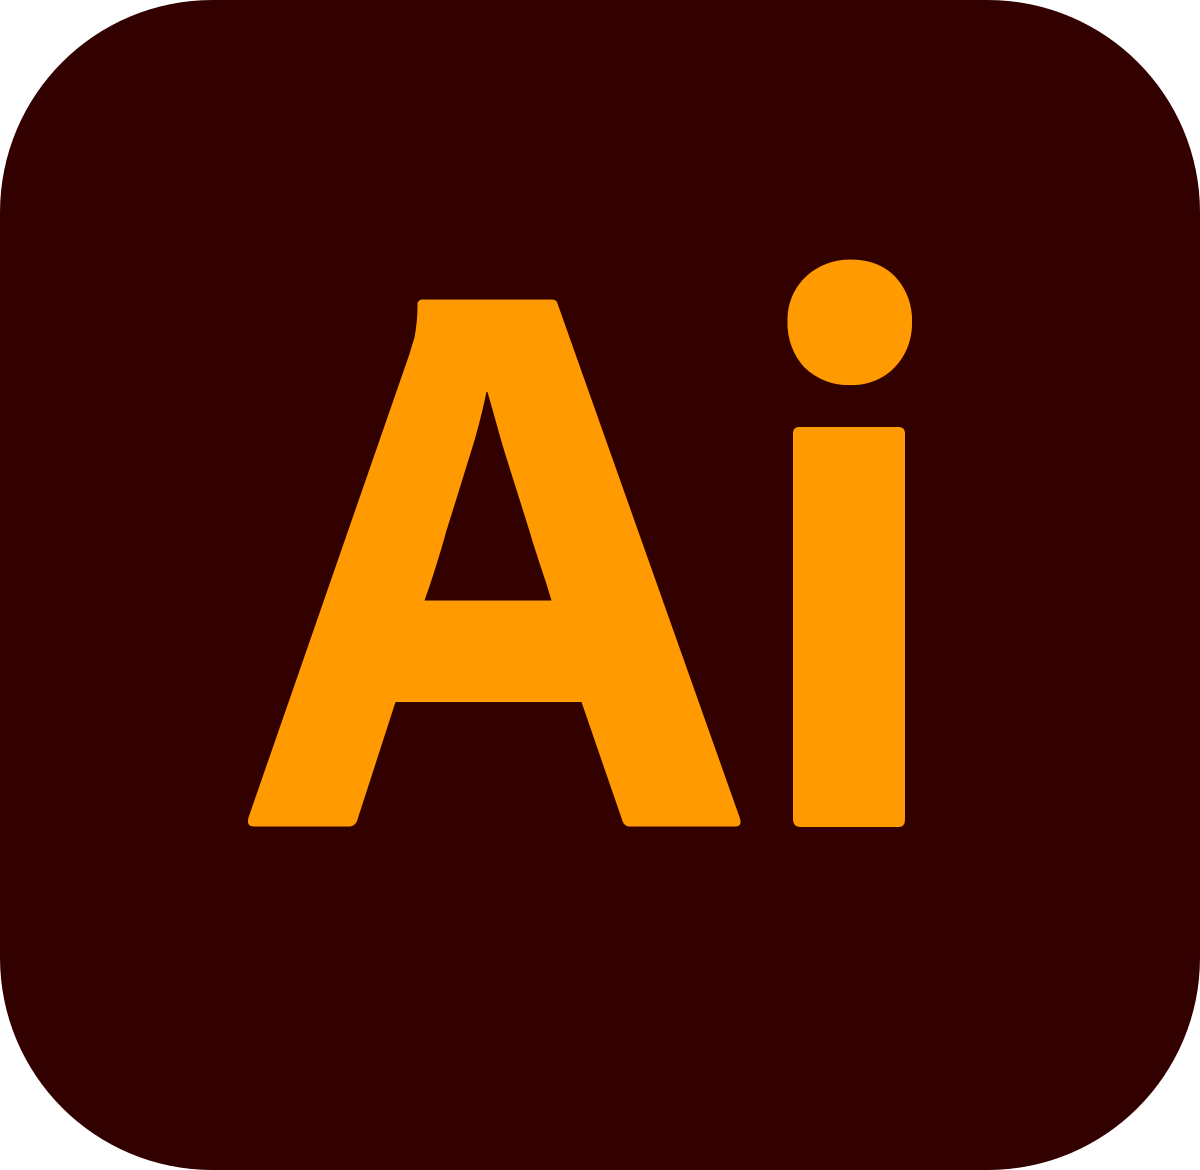 Adobe Illustrator - CorelDraw Alternatives for Windows